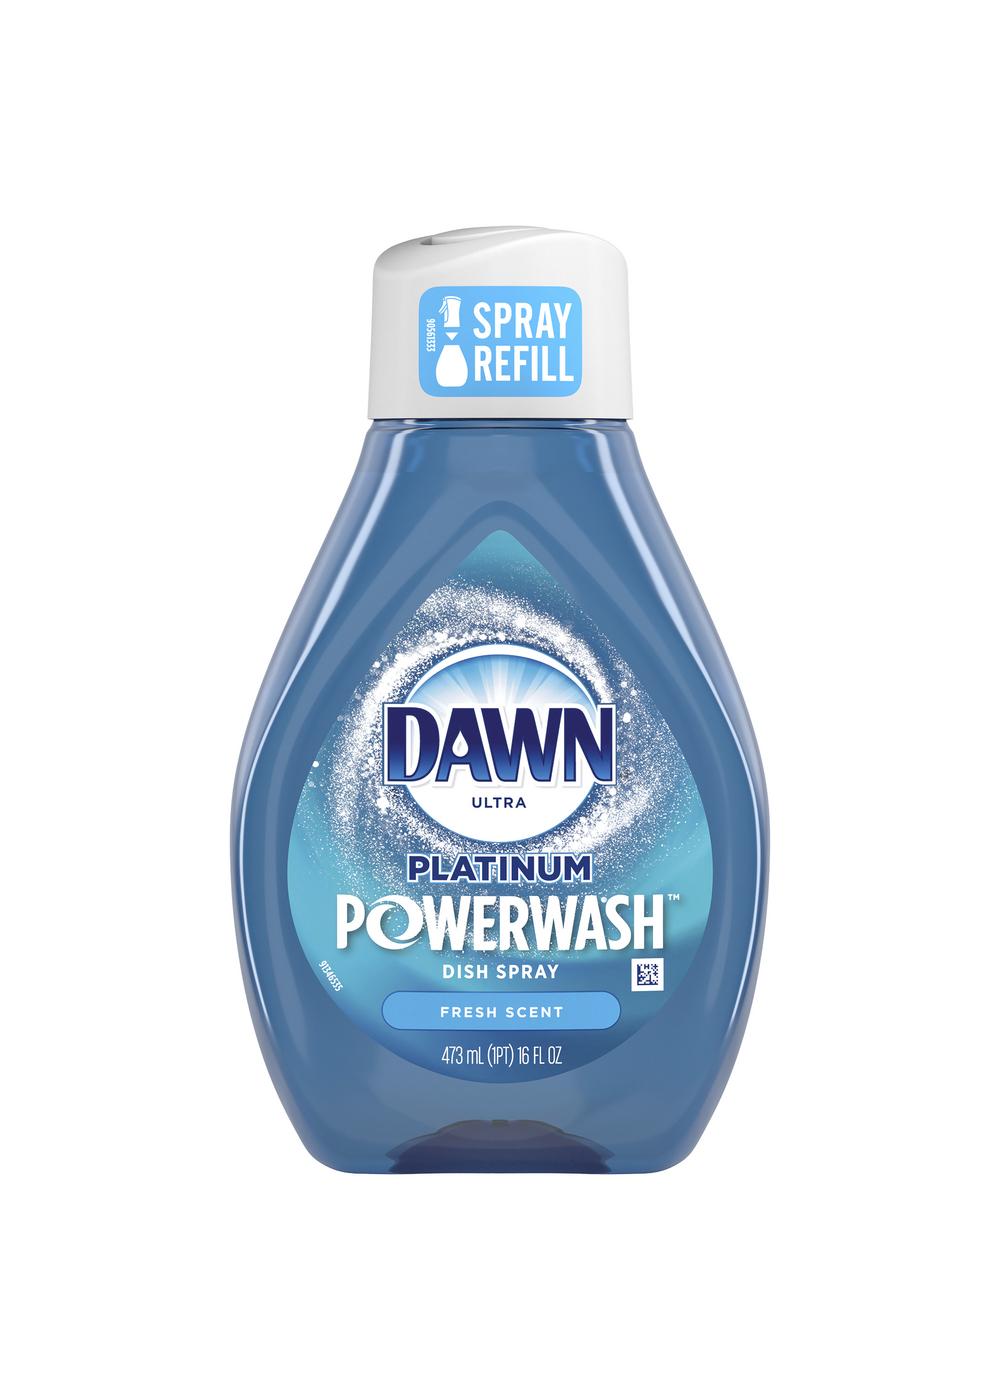 Dawn Powerwash Platinum Fresh Scent Dish Spray Refill; image 1 of 11